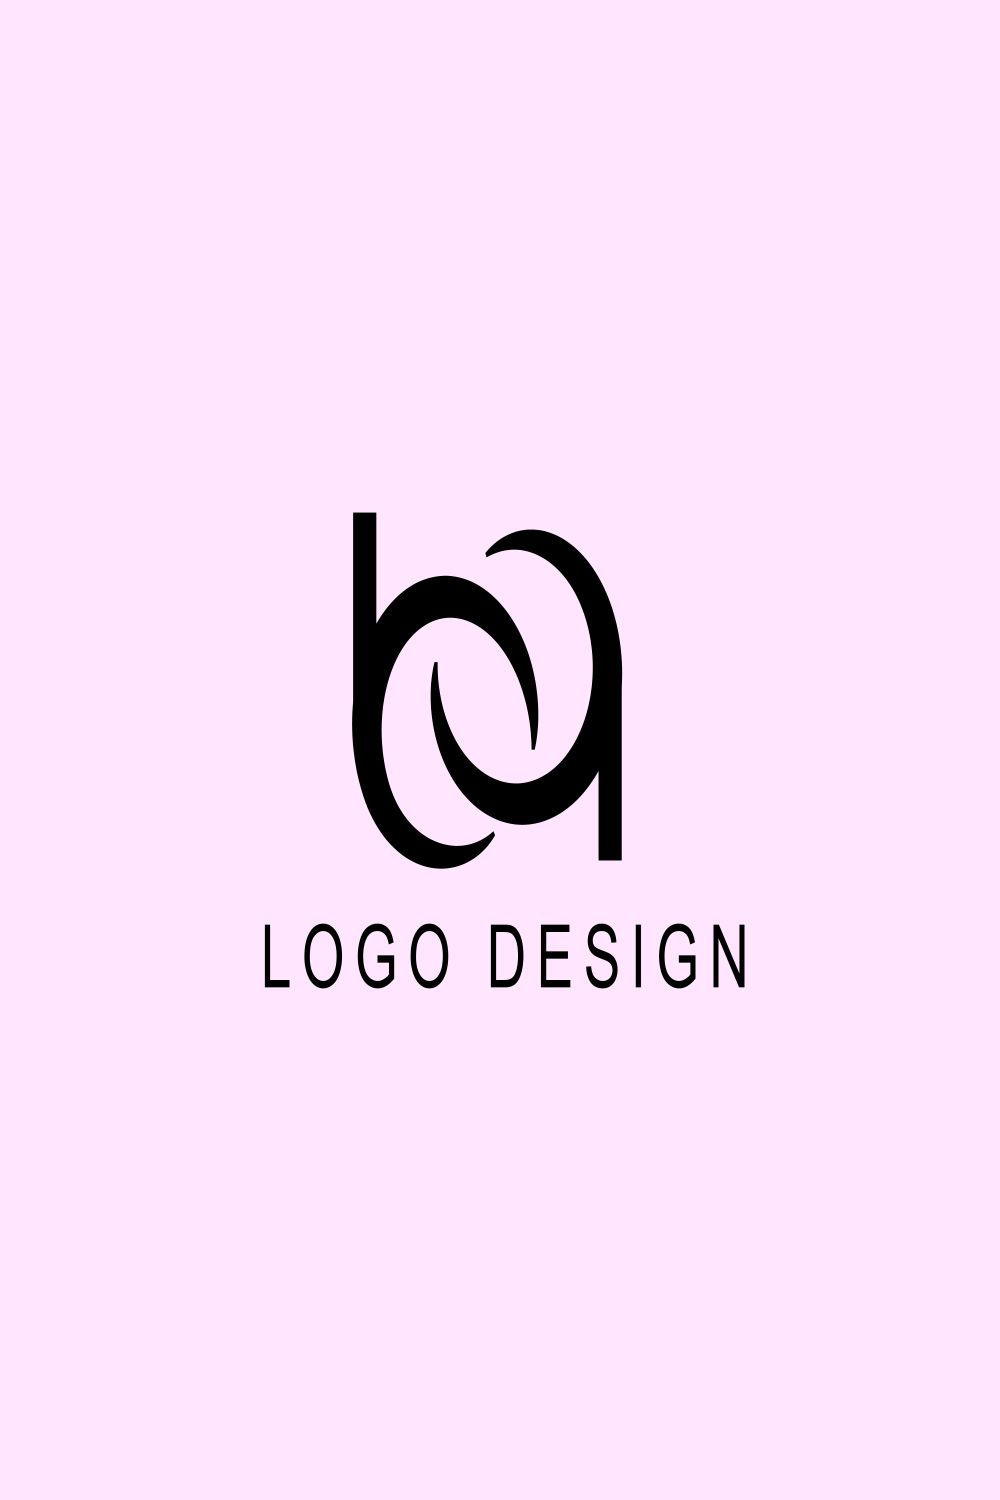 Letters Logo Design Pinterest Collage image.